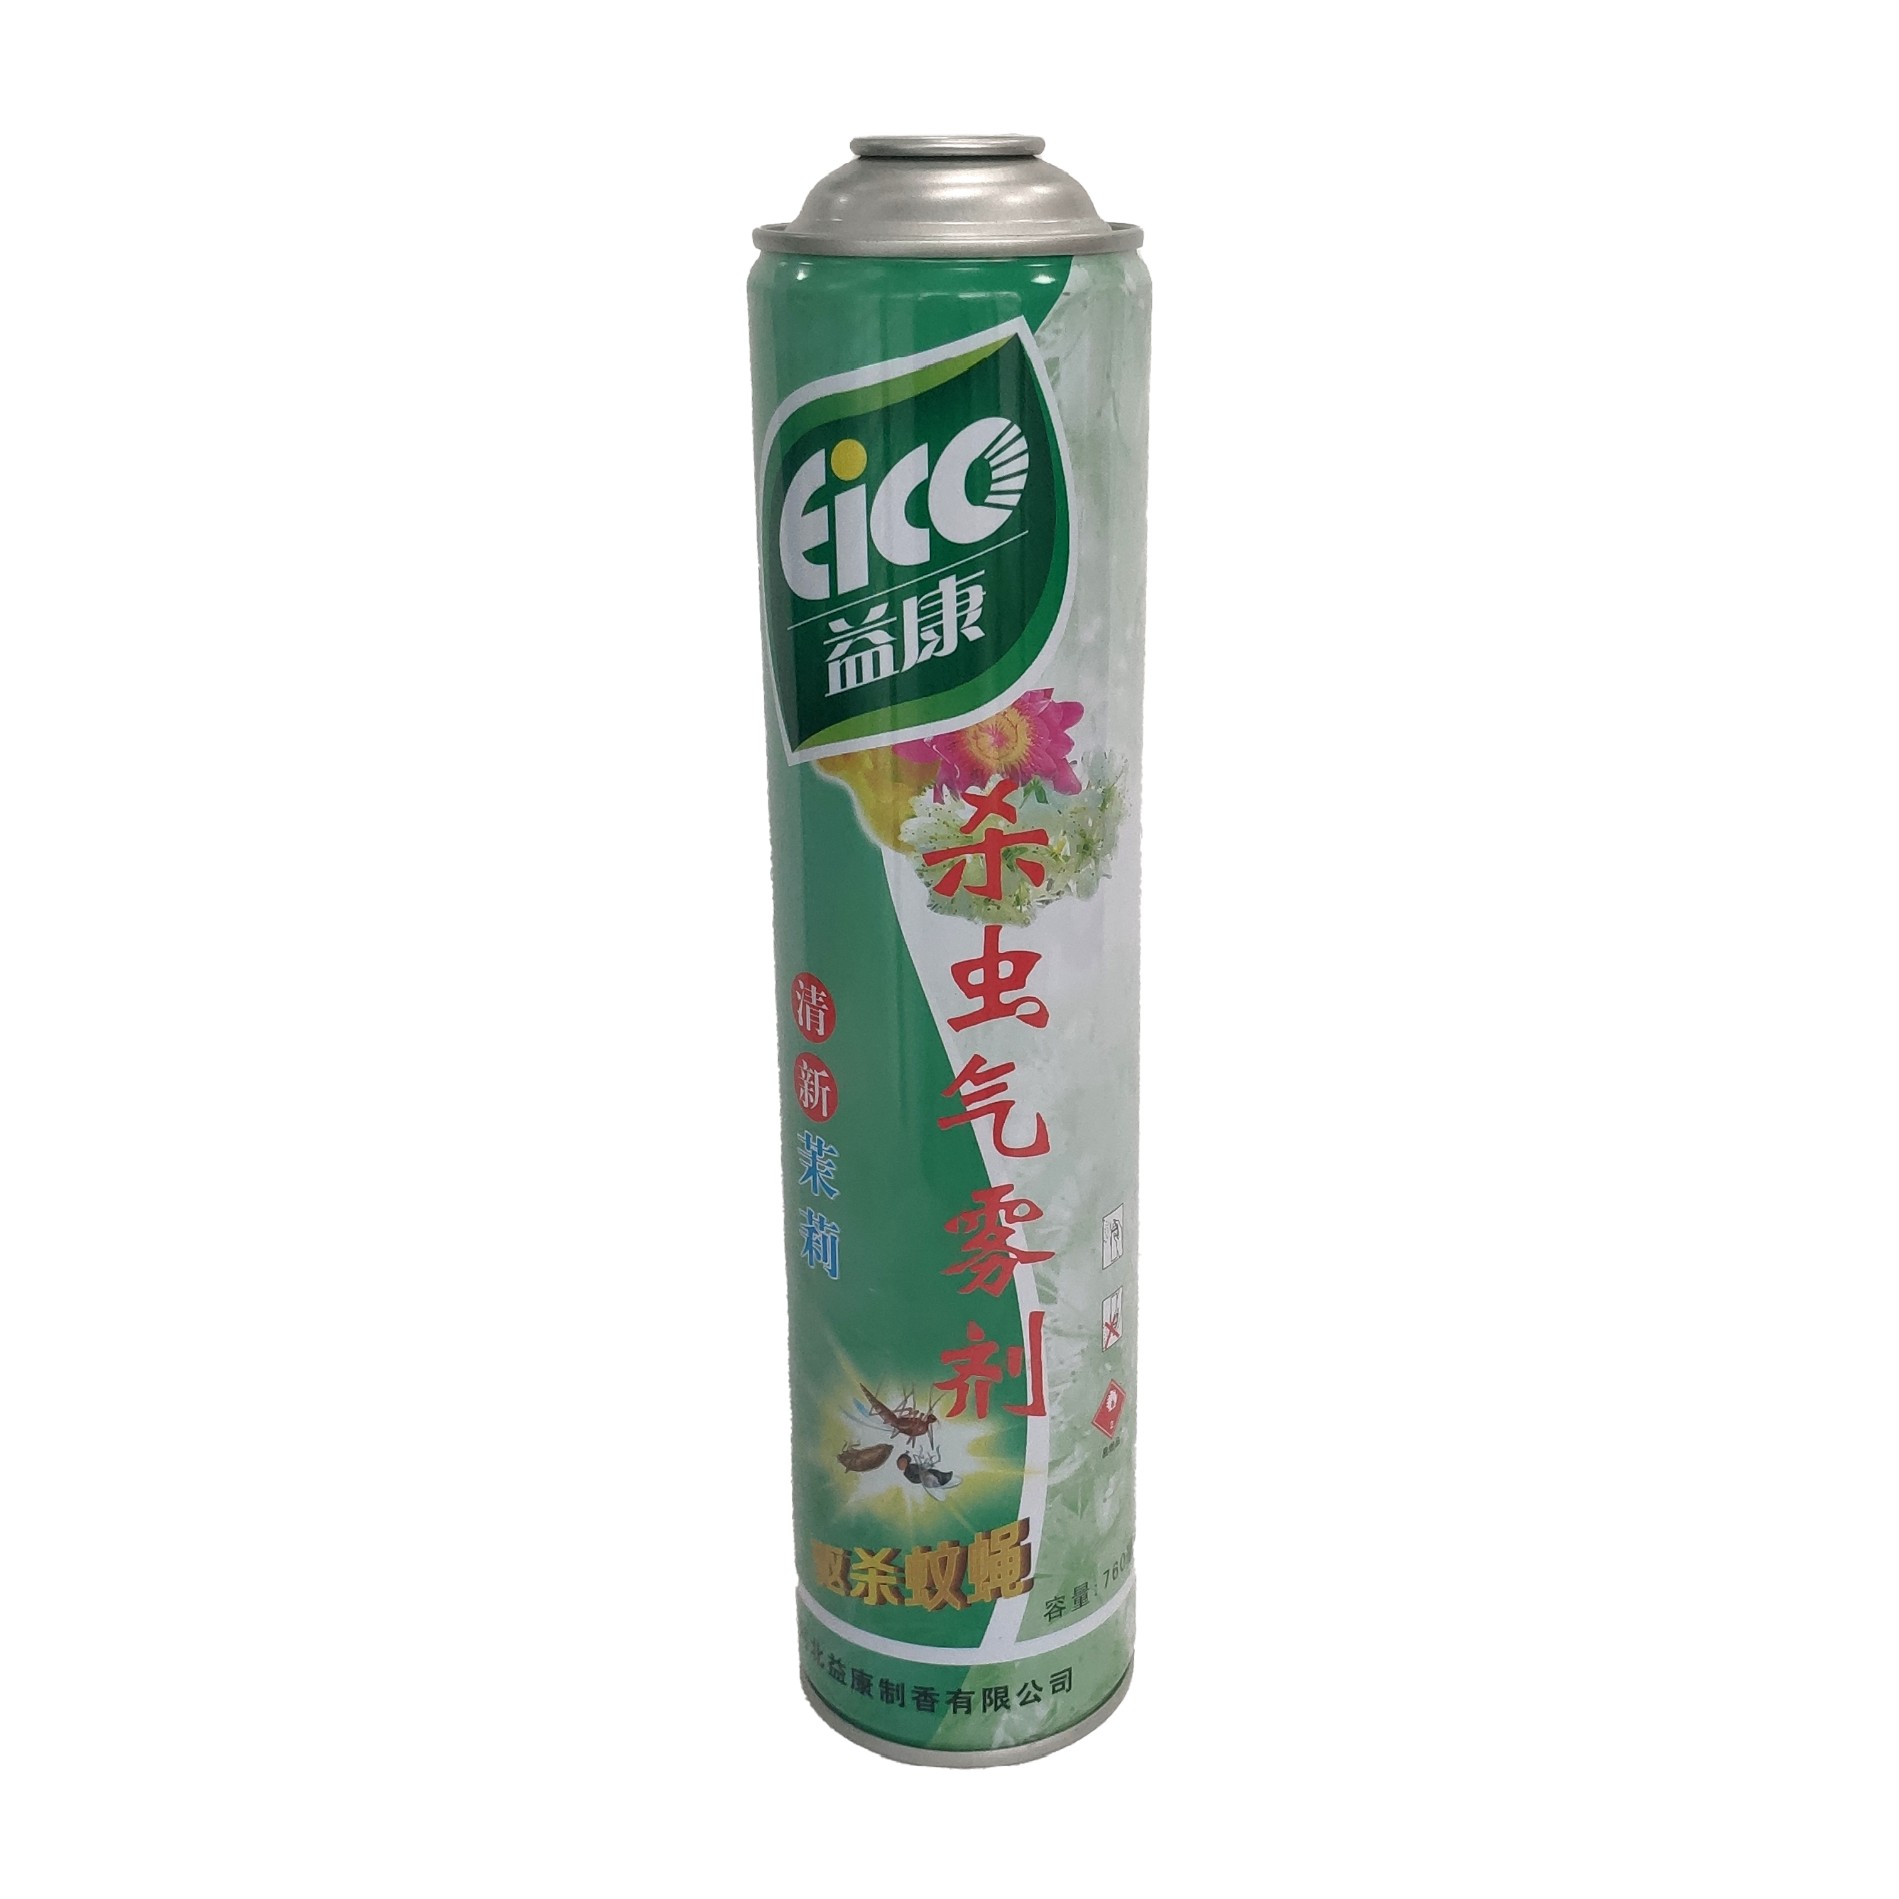 750ML Empty Insects Killer Bottle Aerosol Spray Tin Can